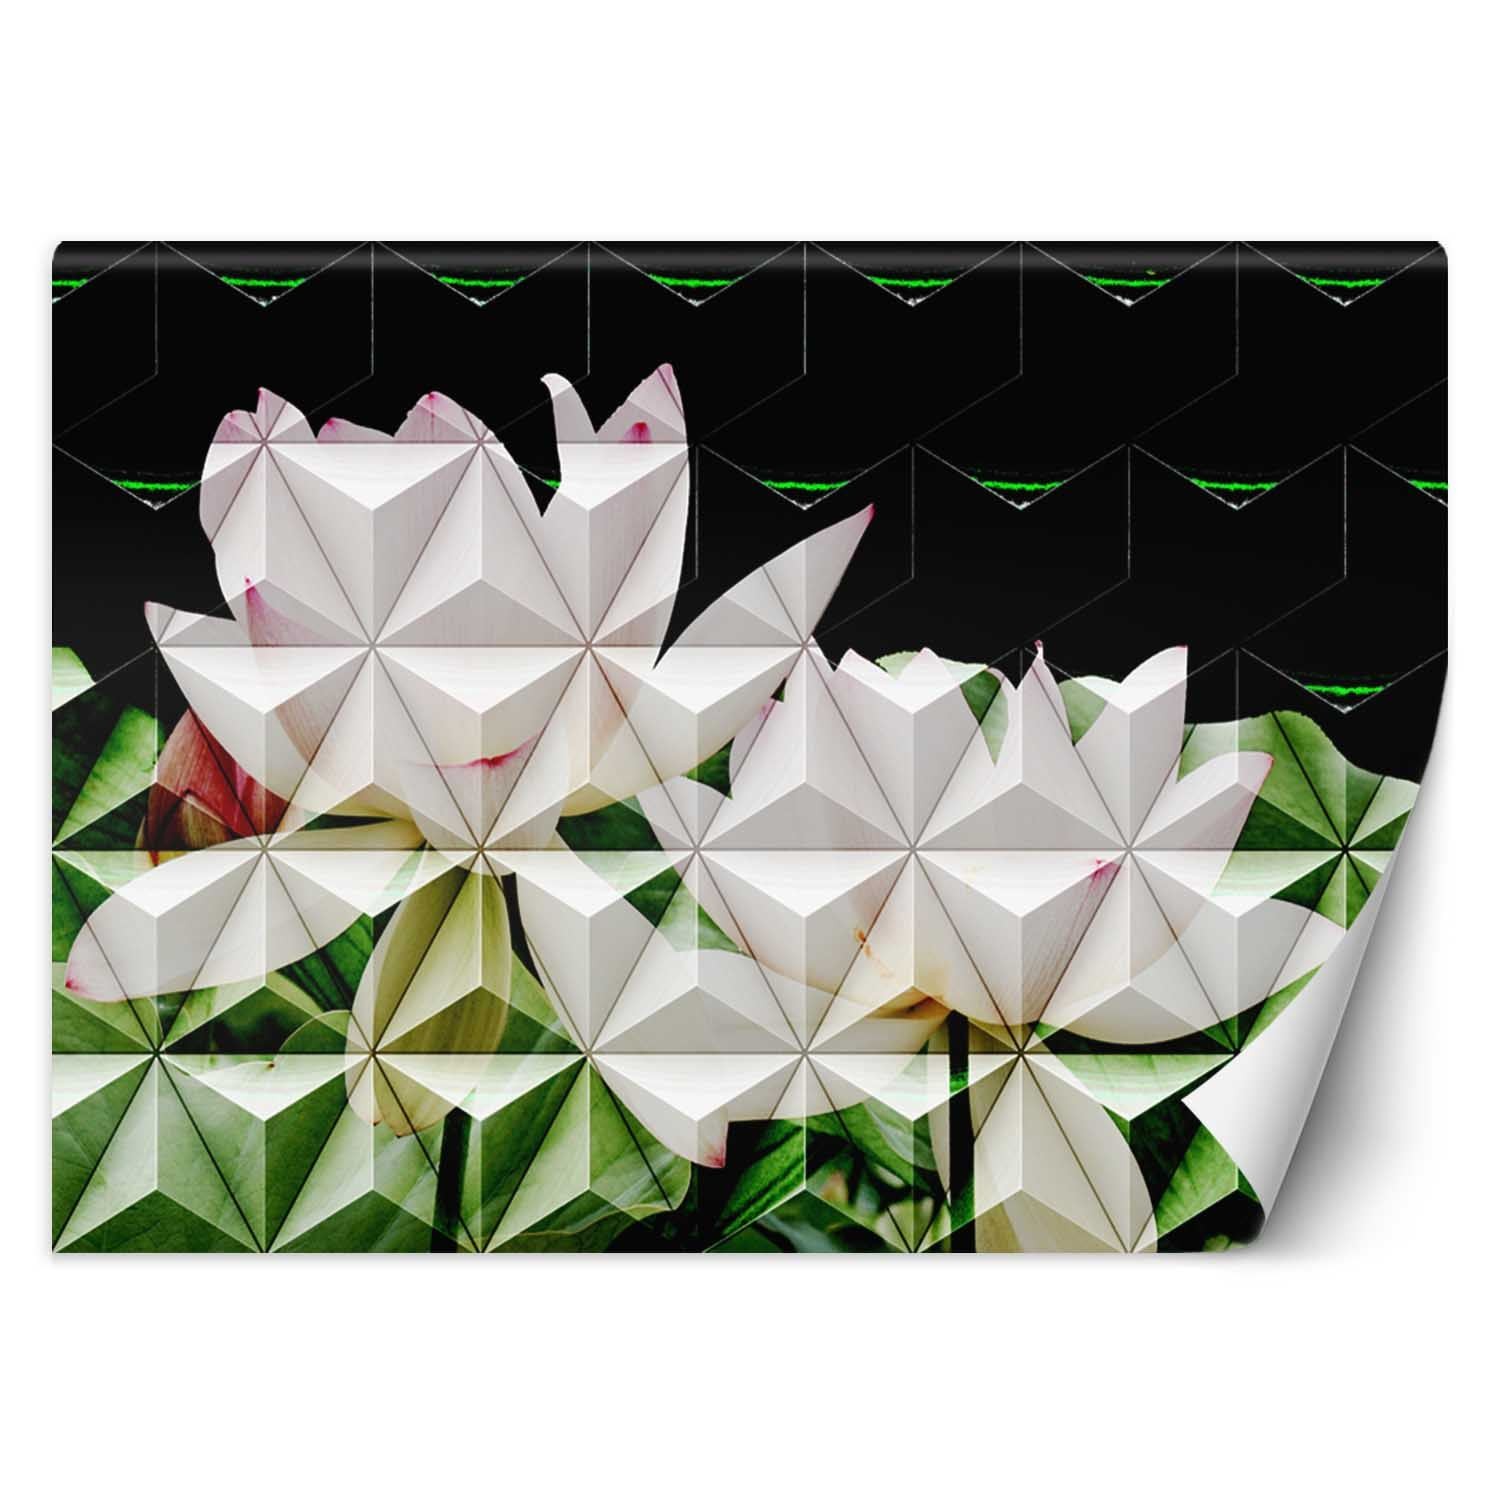 Trend24 – Behang – Lotusbloem Geometrisch – Vliesbehang – Behang Woonkamer – Fotobehang – 350x245x2 cm – Incl. behanglijm